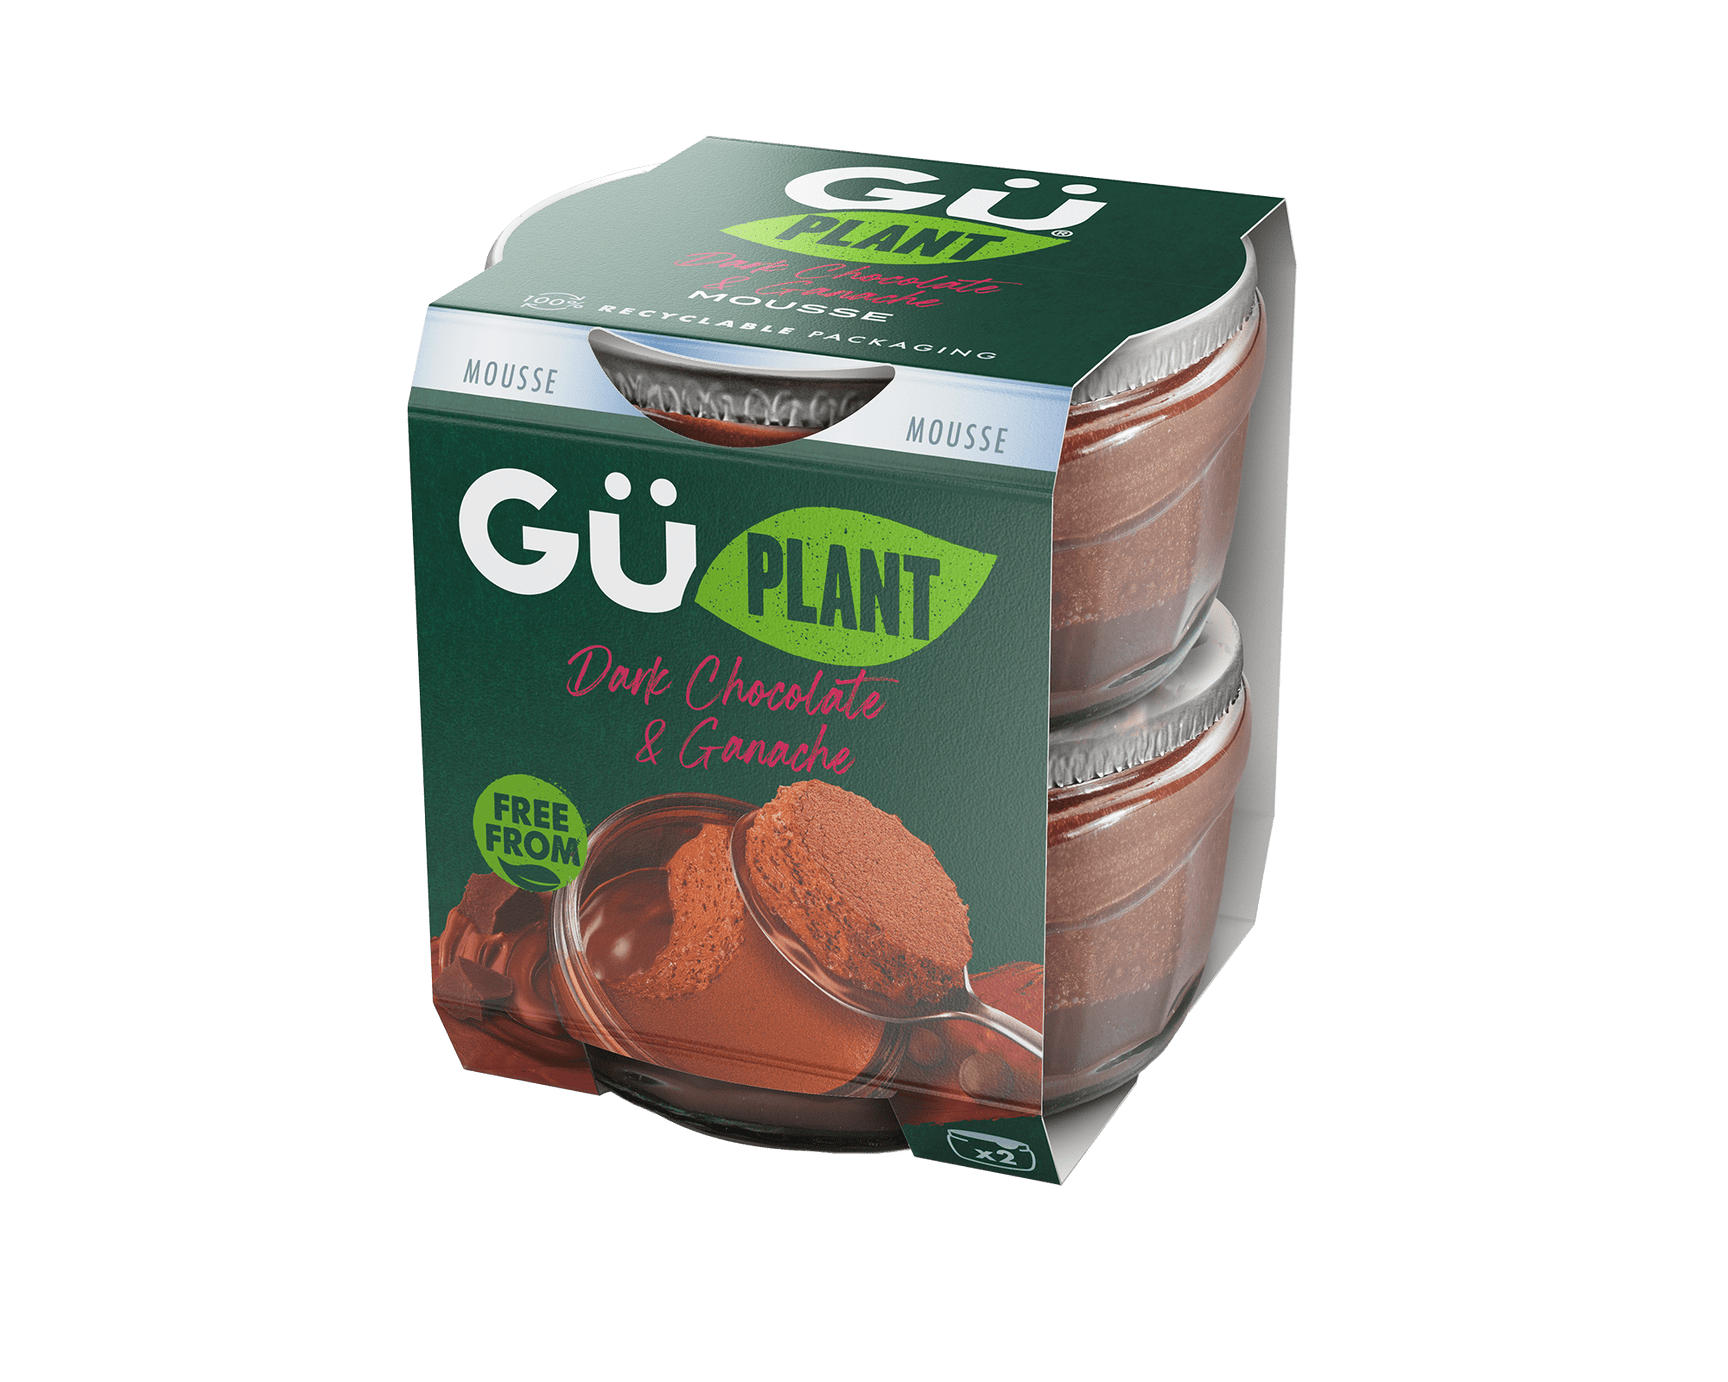 pack Gu Plant Dark Chocolate and Ganache mousse